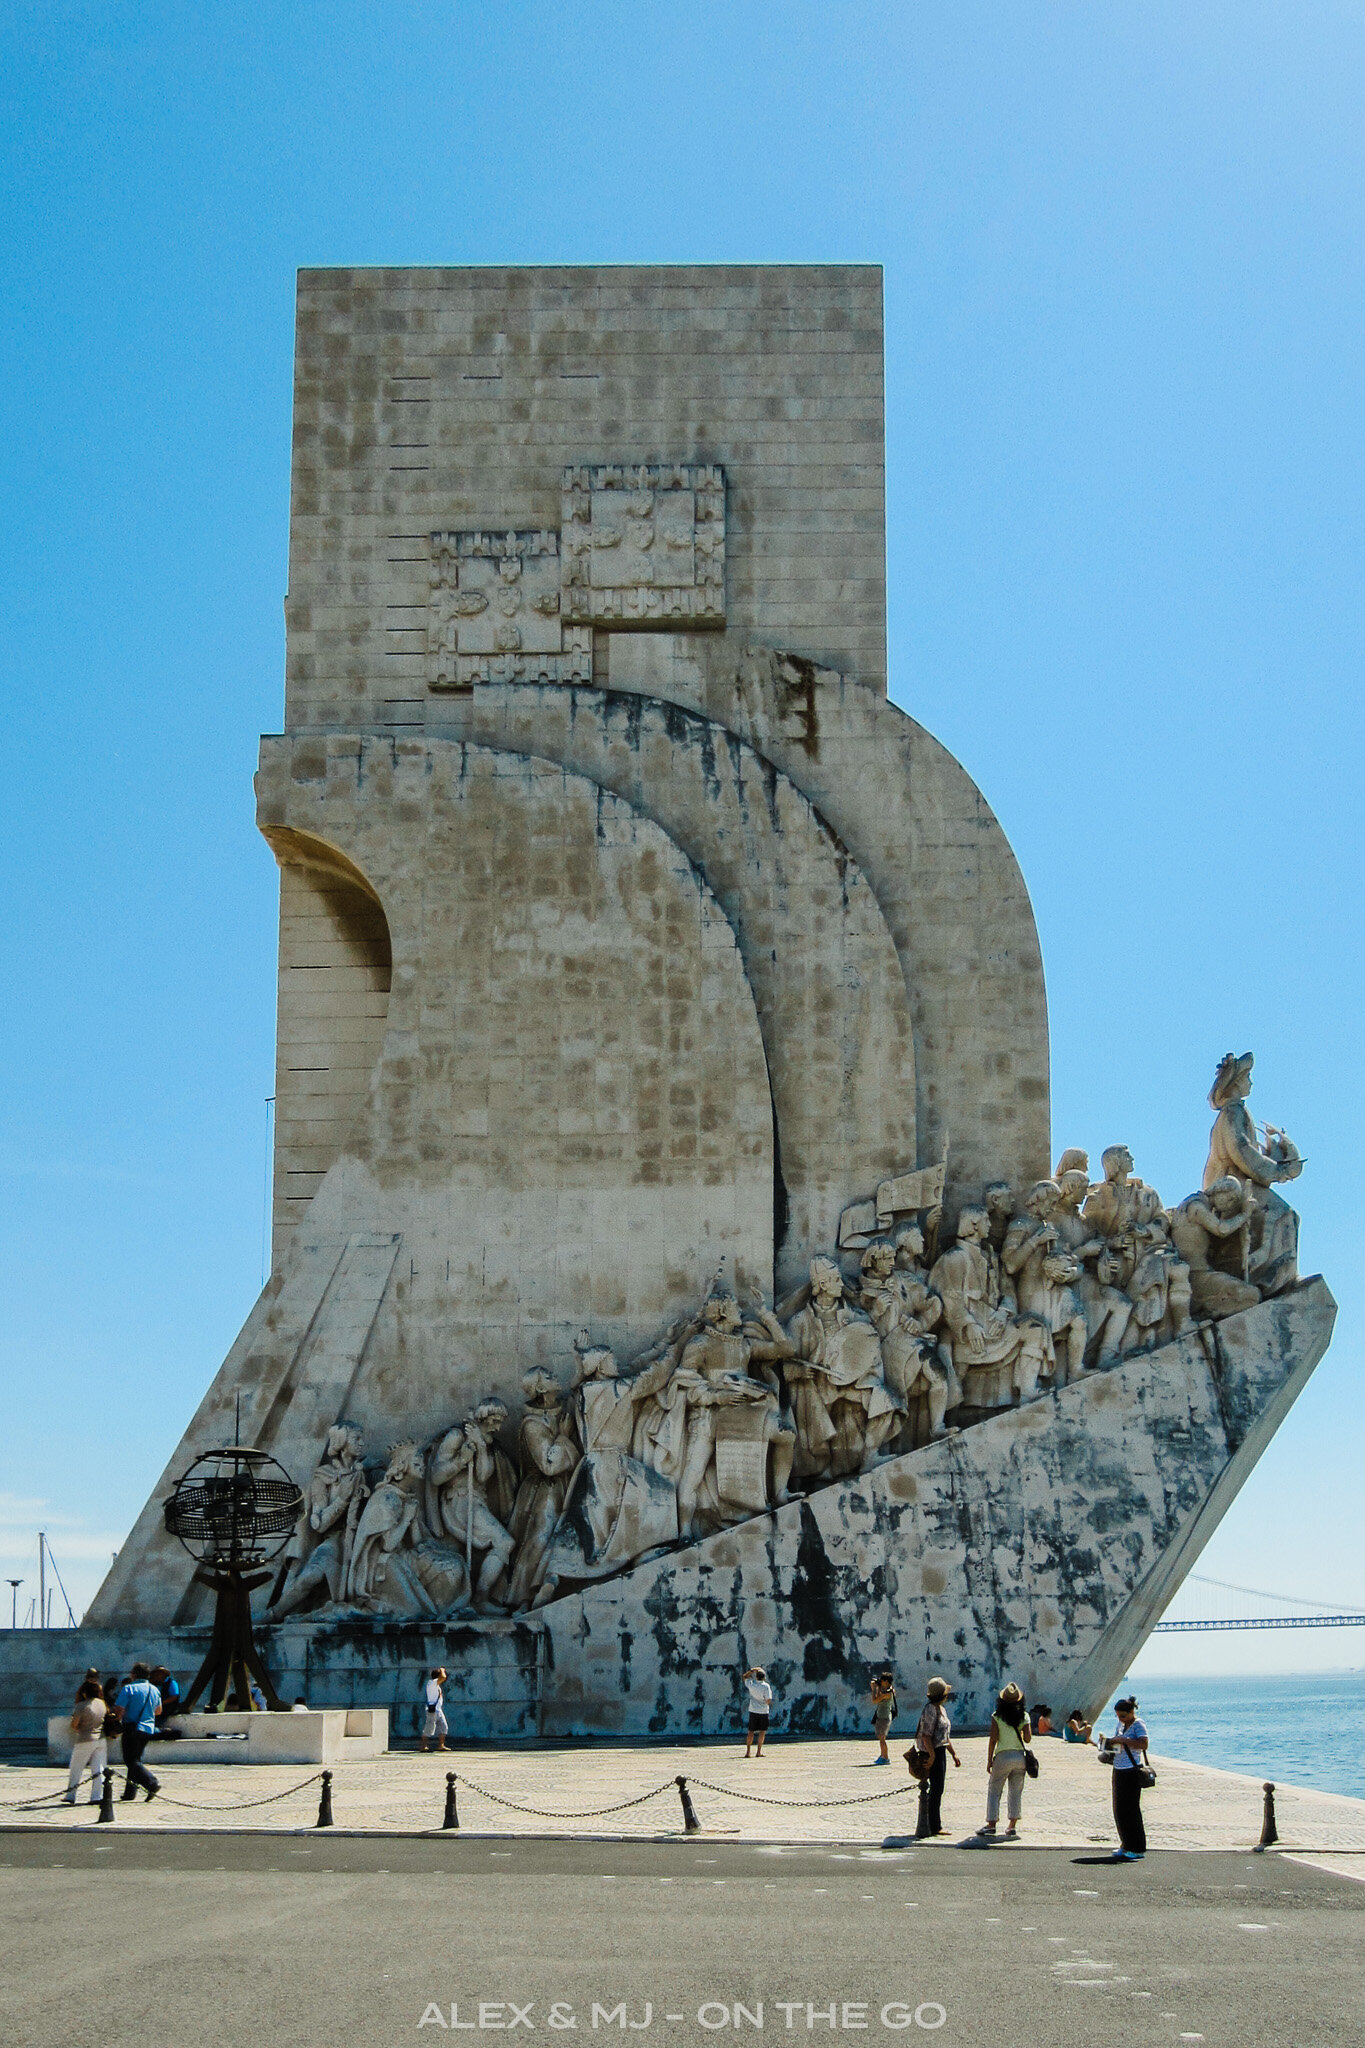 Alex-MJ-On-the-GO-Blogue_12 destinations_voyage_automne-Portugal-Monument.jpg